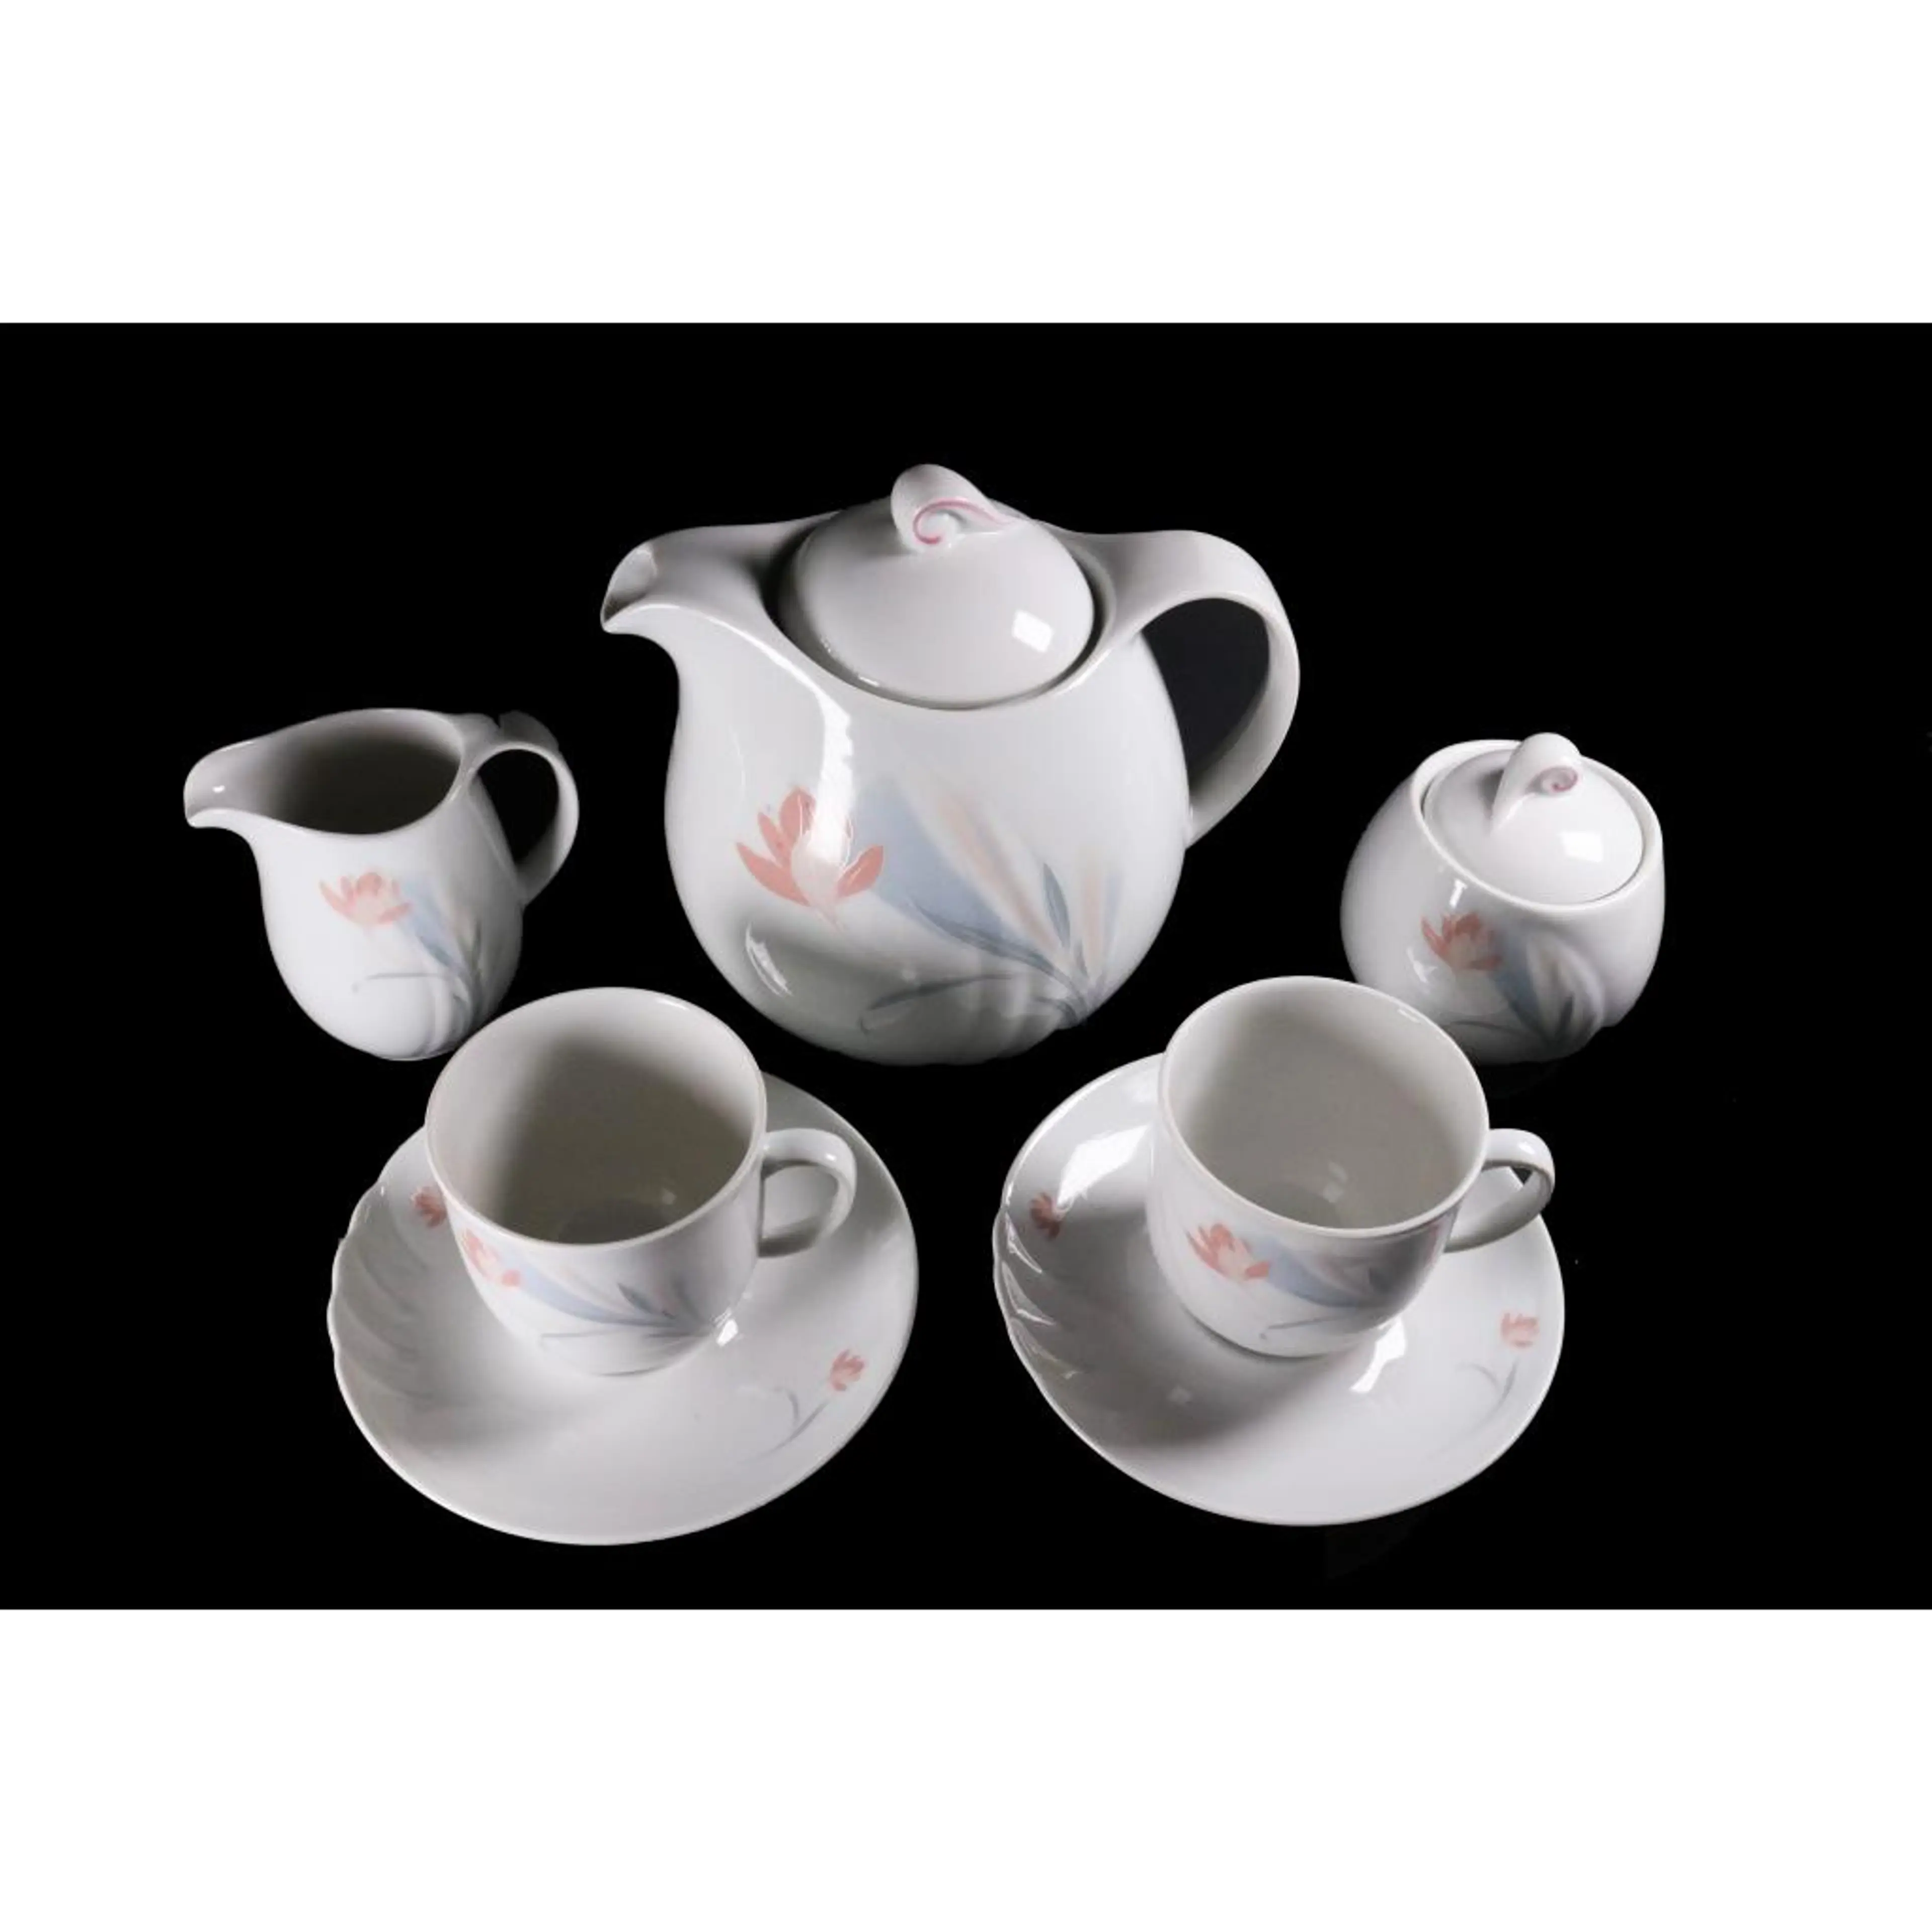 Tea/Coffee set Porcelain 12pcs.